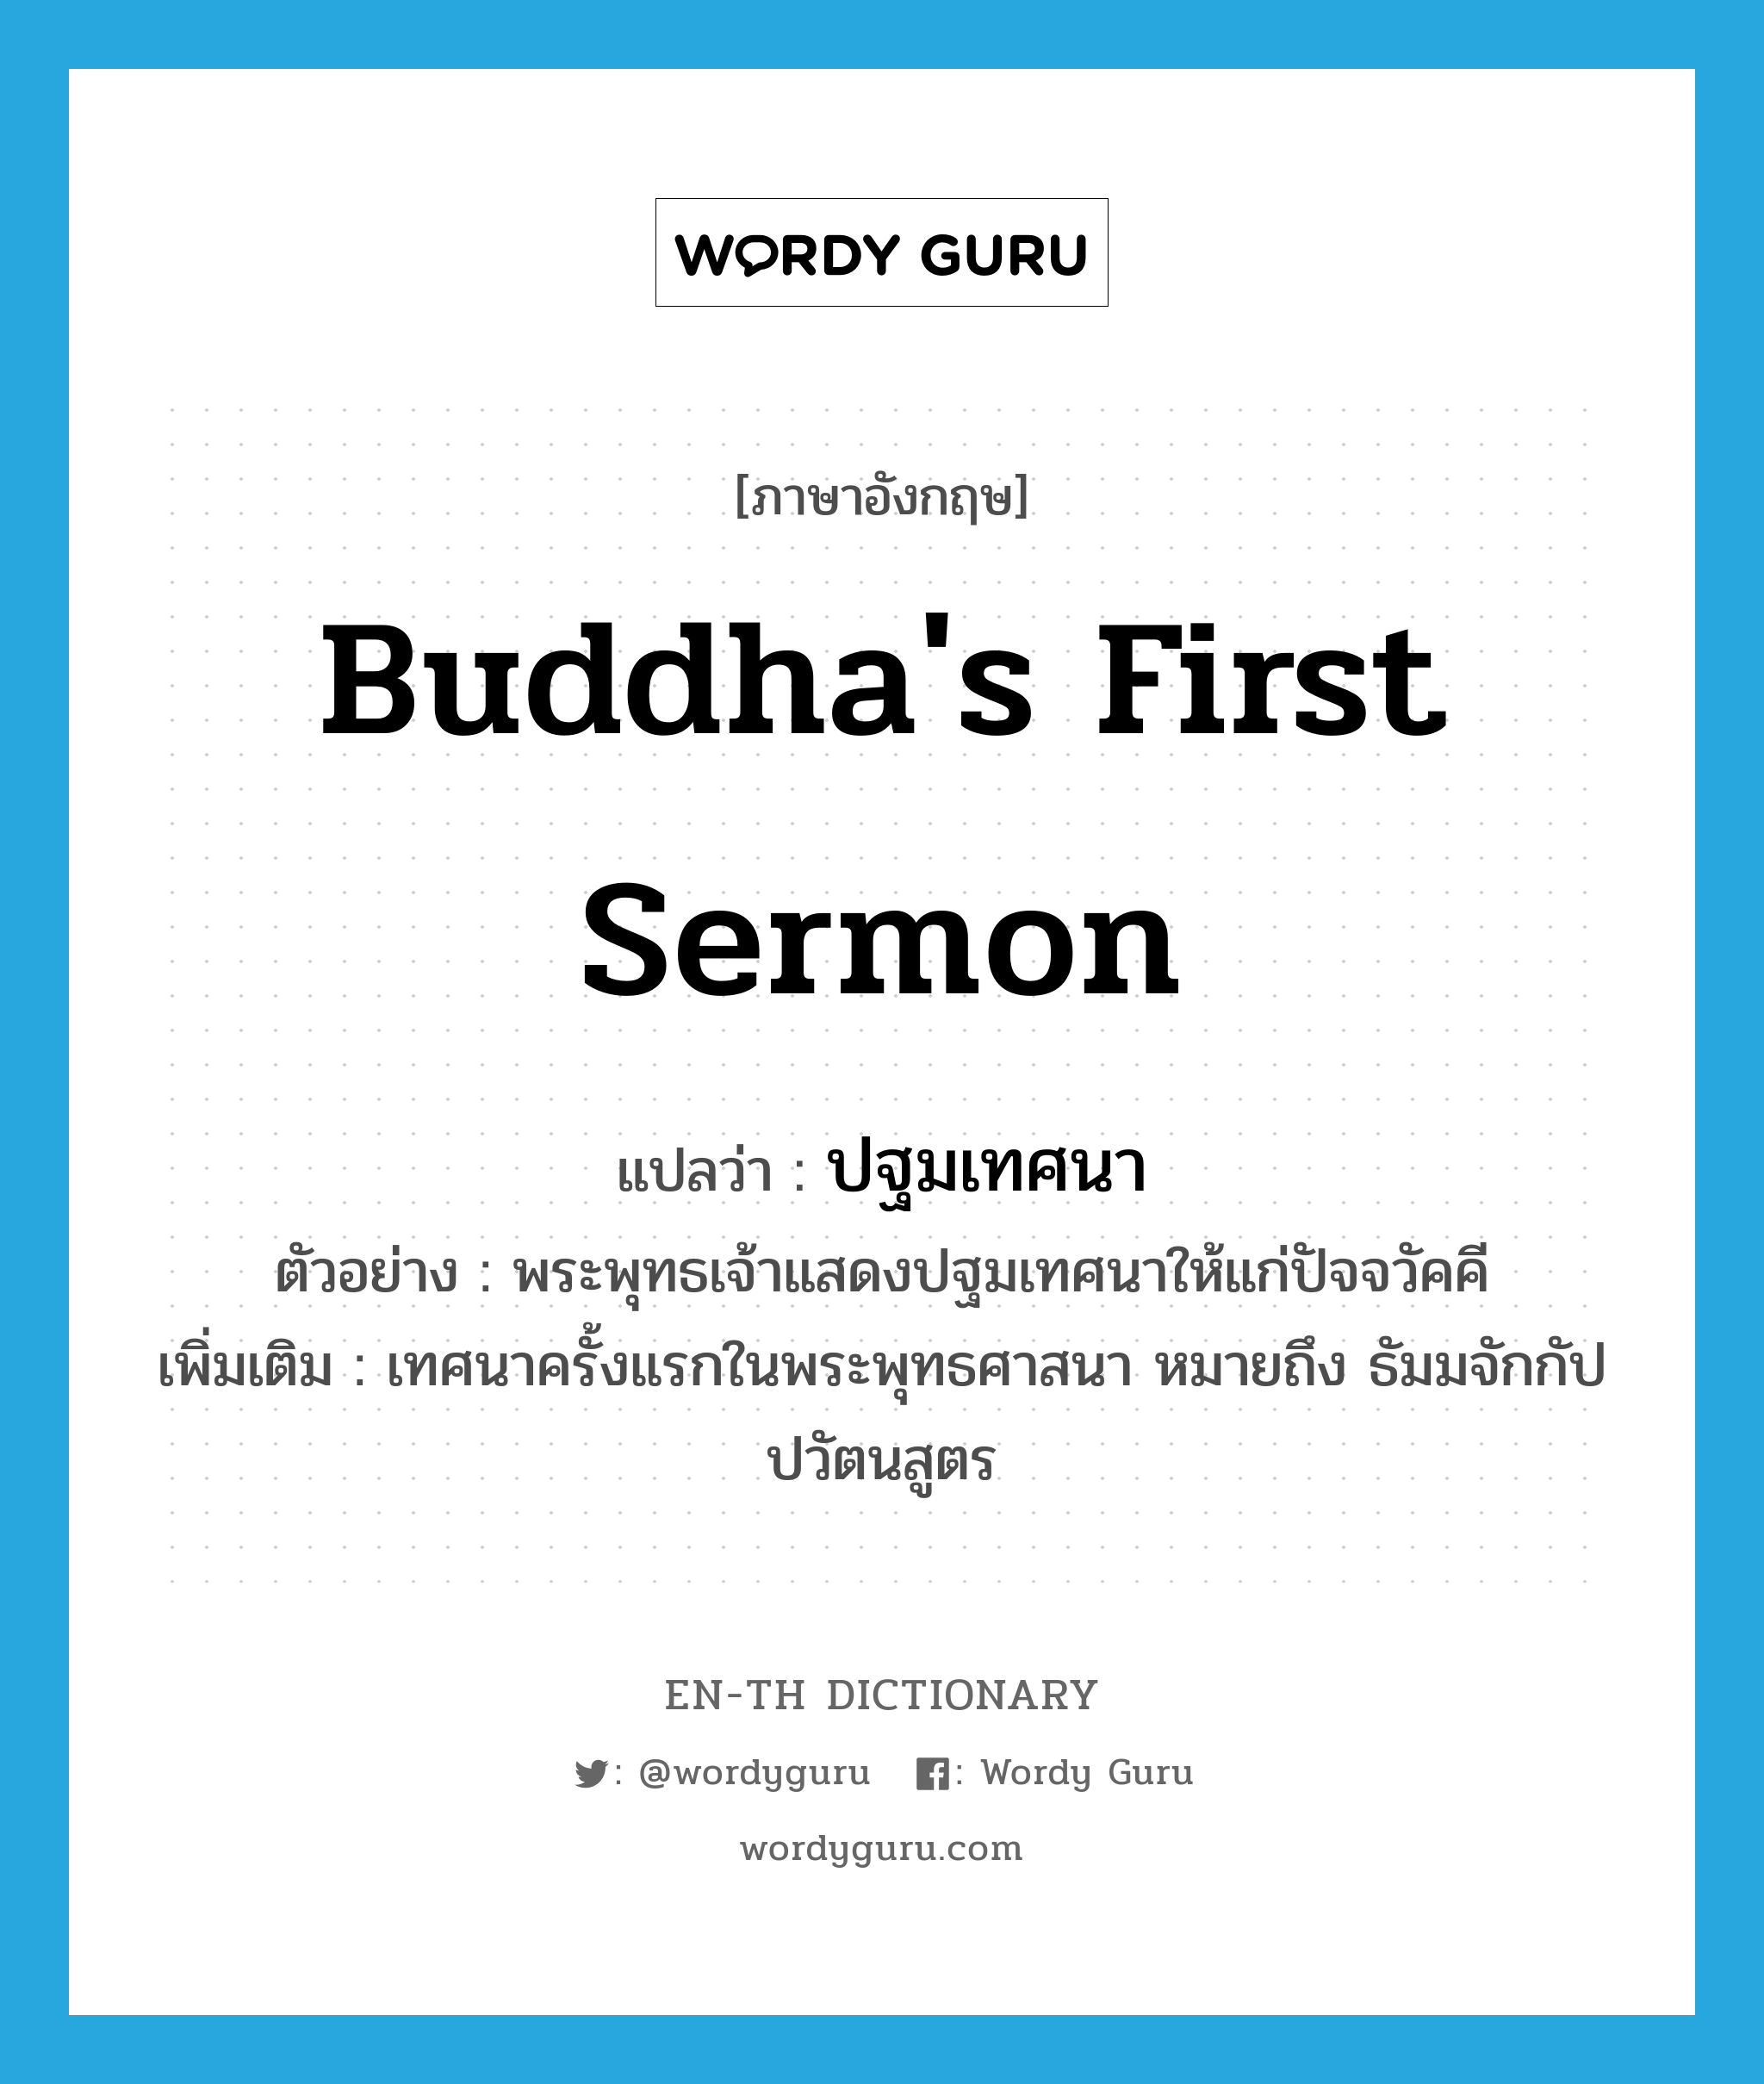 Buddha's first sermon แปลว่า?, คำศัพท์ภาษาอังกฤษ Buddha's first sermon แปลว่า ปฐมเทศนา ประเภท N ตัวอย่าง พระพุทธเจ้าแสดงปฐมเทศนาให้แก่ปัจจวัคคี เพิ่มเติม เทศนาครั้งแรกในพระพุทธศาสนา หมายถึง ธัมมจักกัปปวัตนสูตร หมวด N